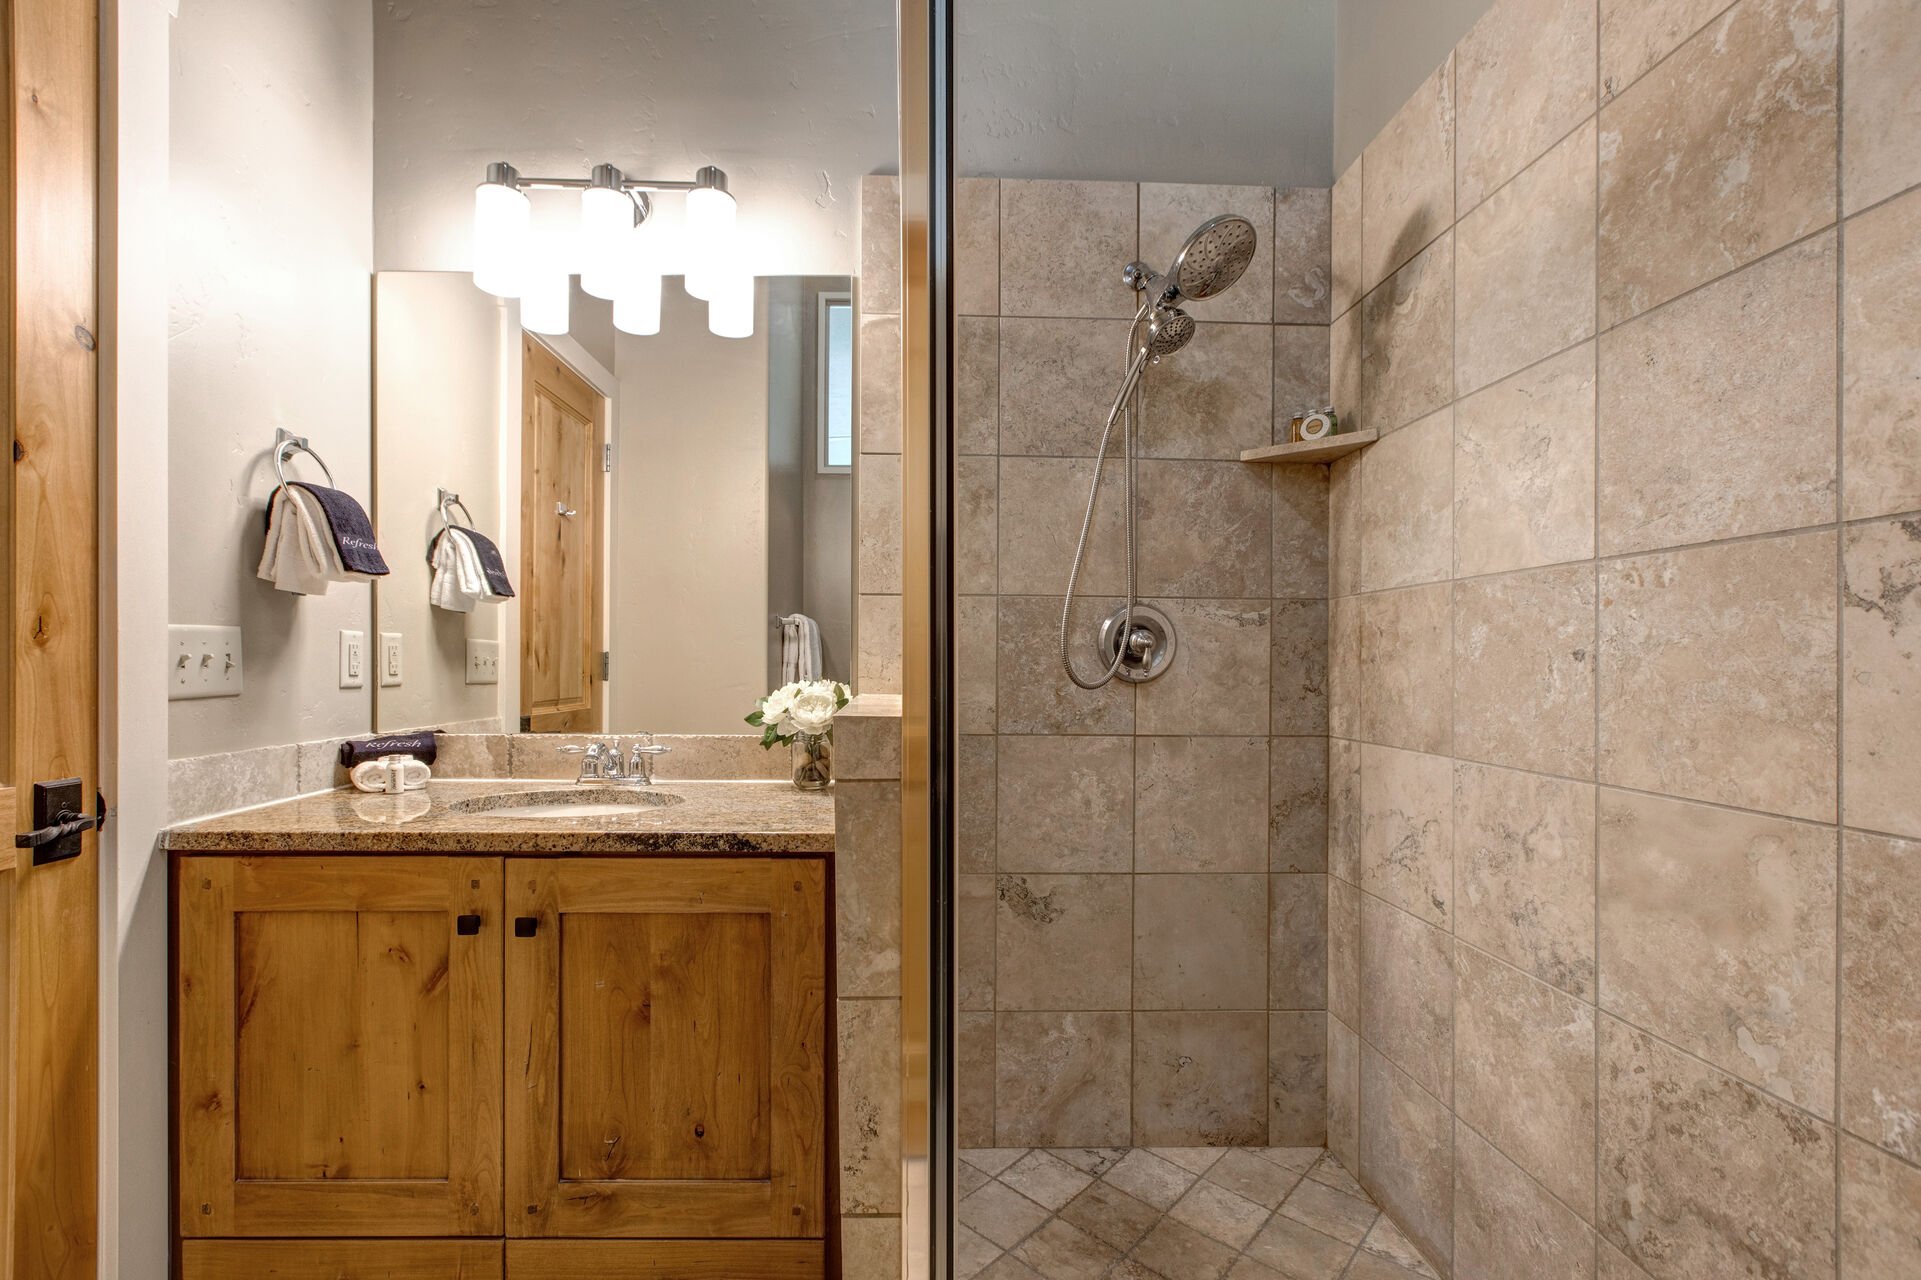 Master Bathroom with large tiled shower